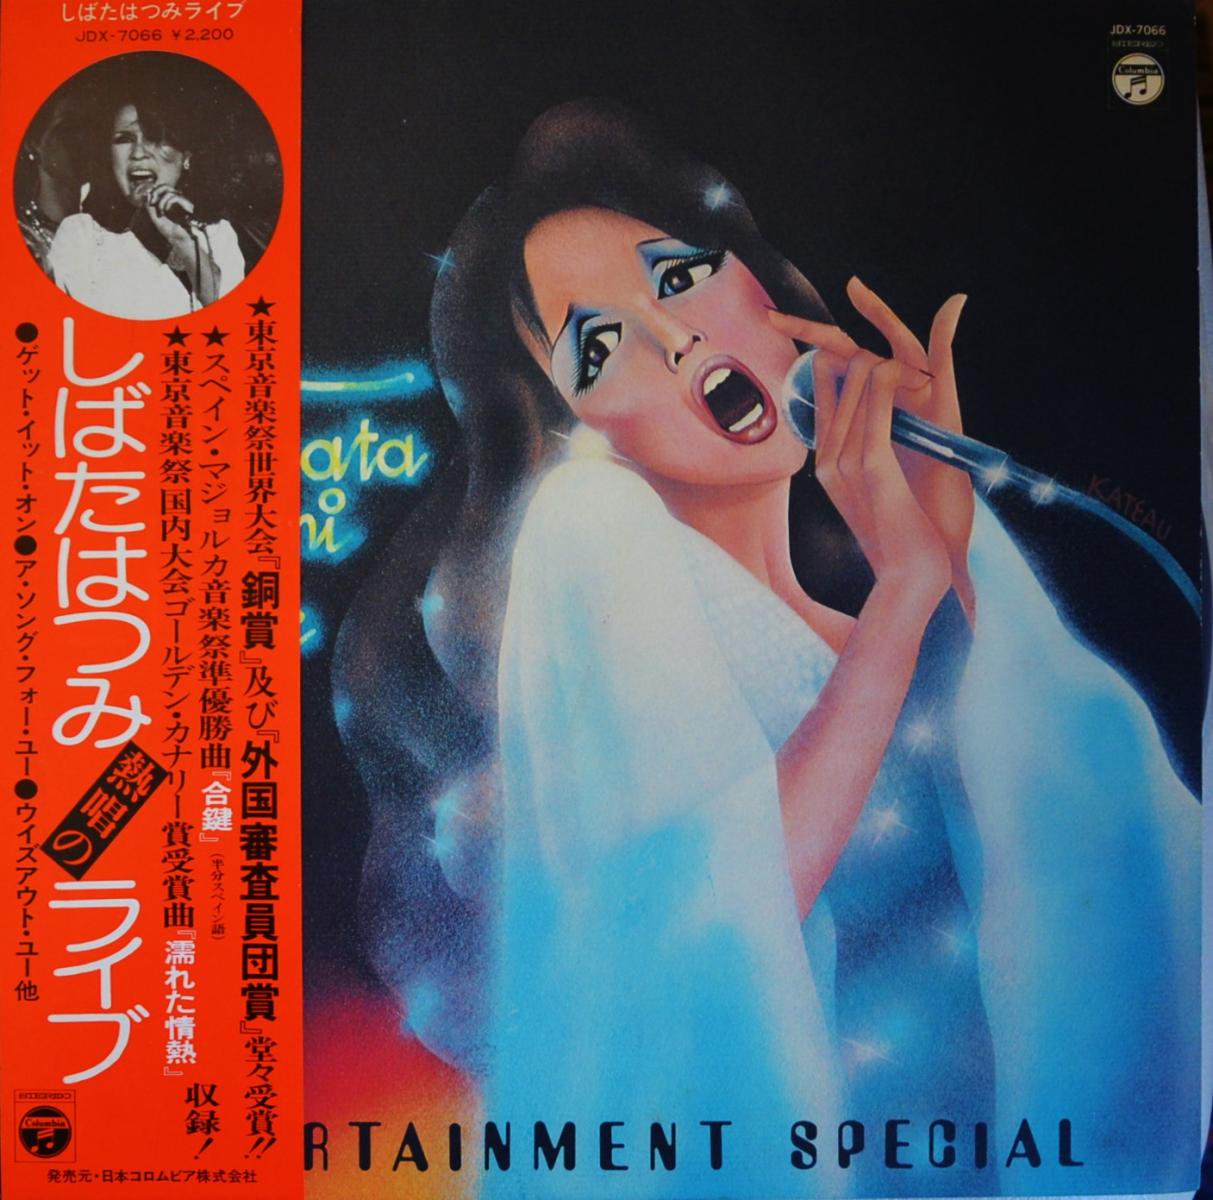 ФϤĤ HATSUMI SHIBATA / 饤  LIVE - ENTERTAINMENT SPECIAL (LP)